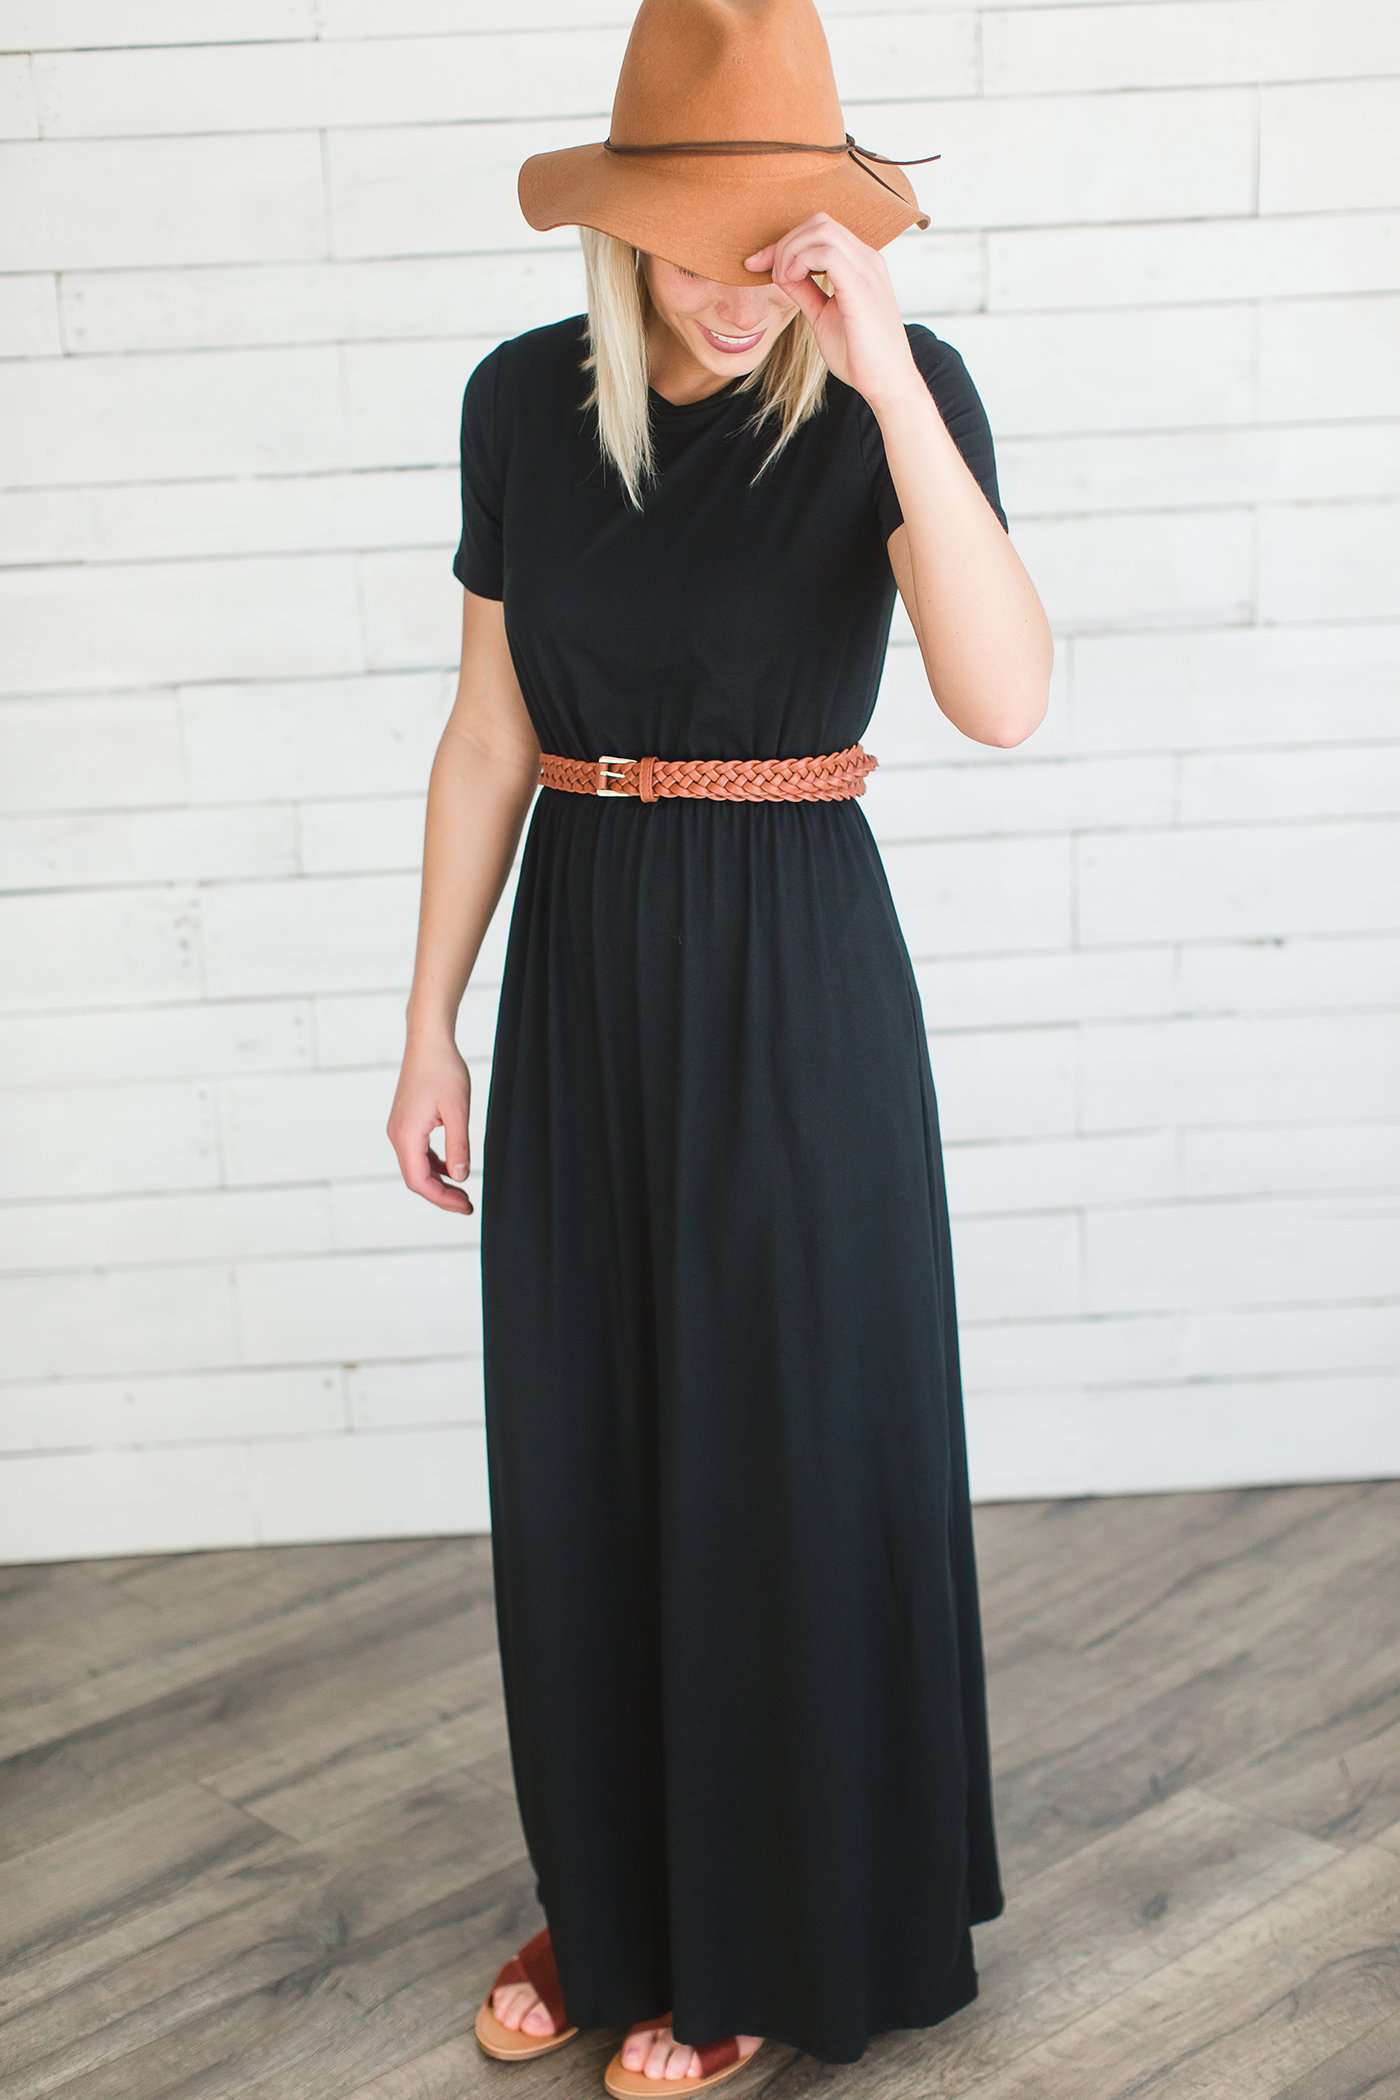 Modest women's maxi dress in peach, navy or black. 2 hidden side seam pockets, elastic waist and short sleeves.